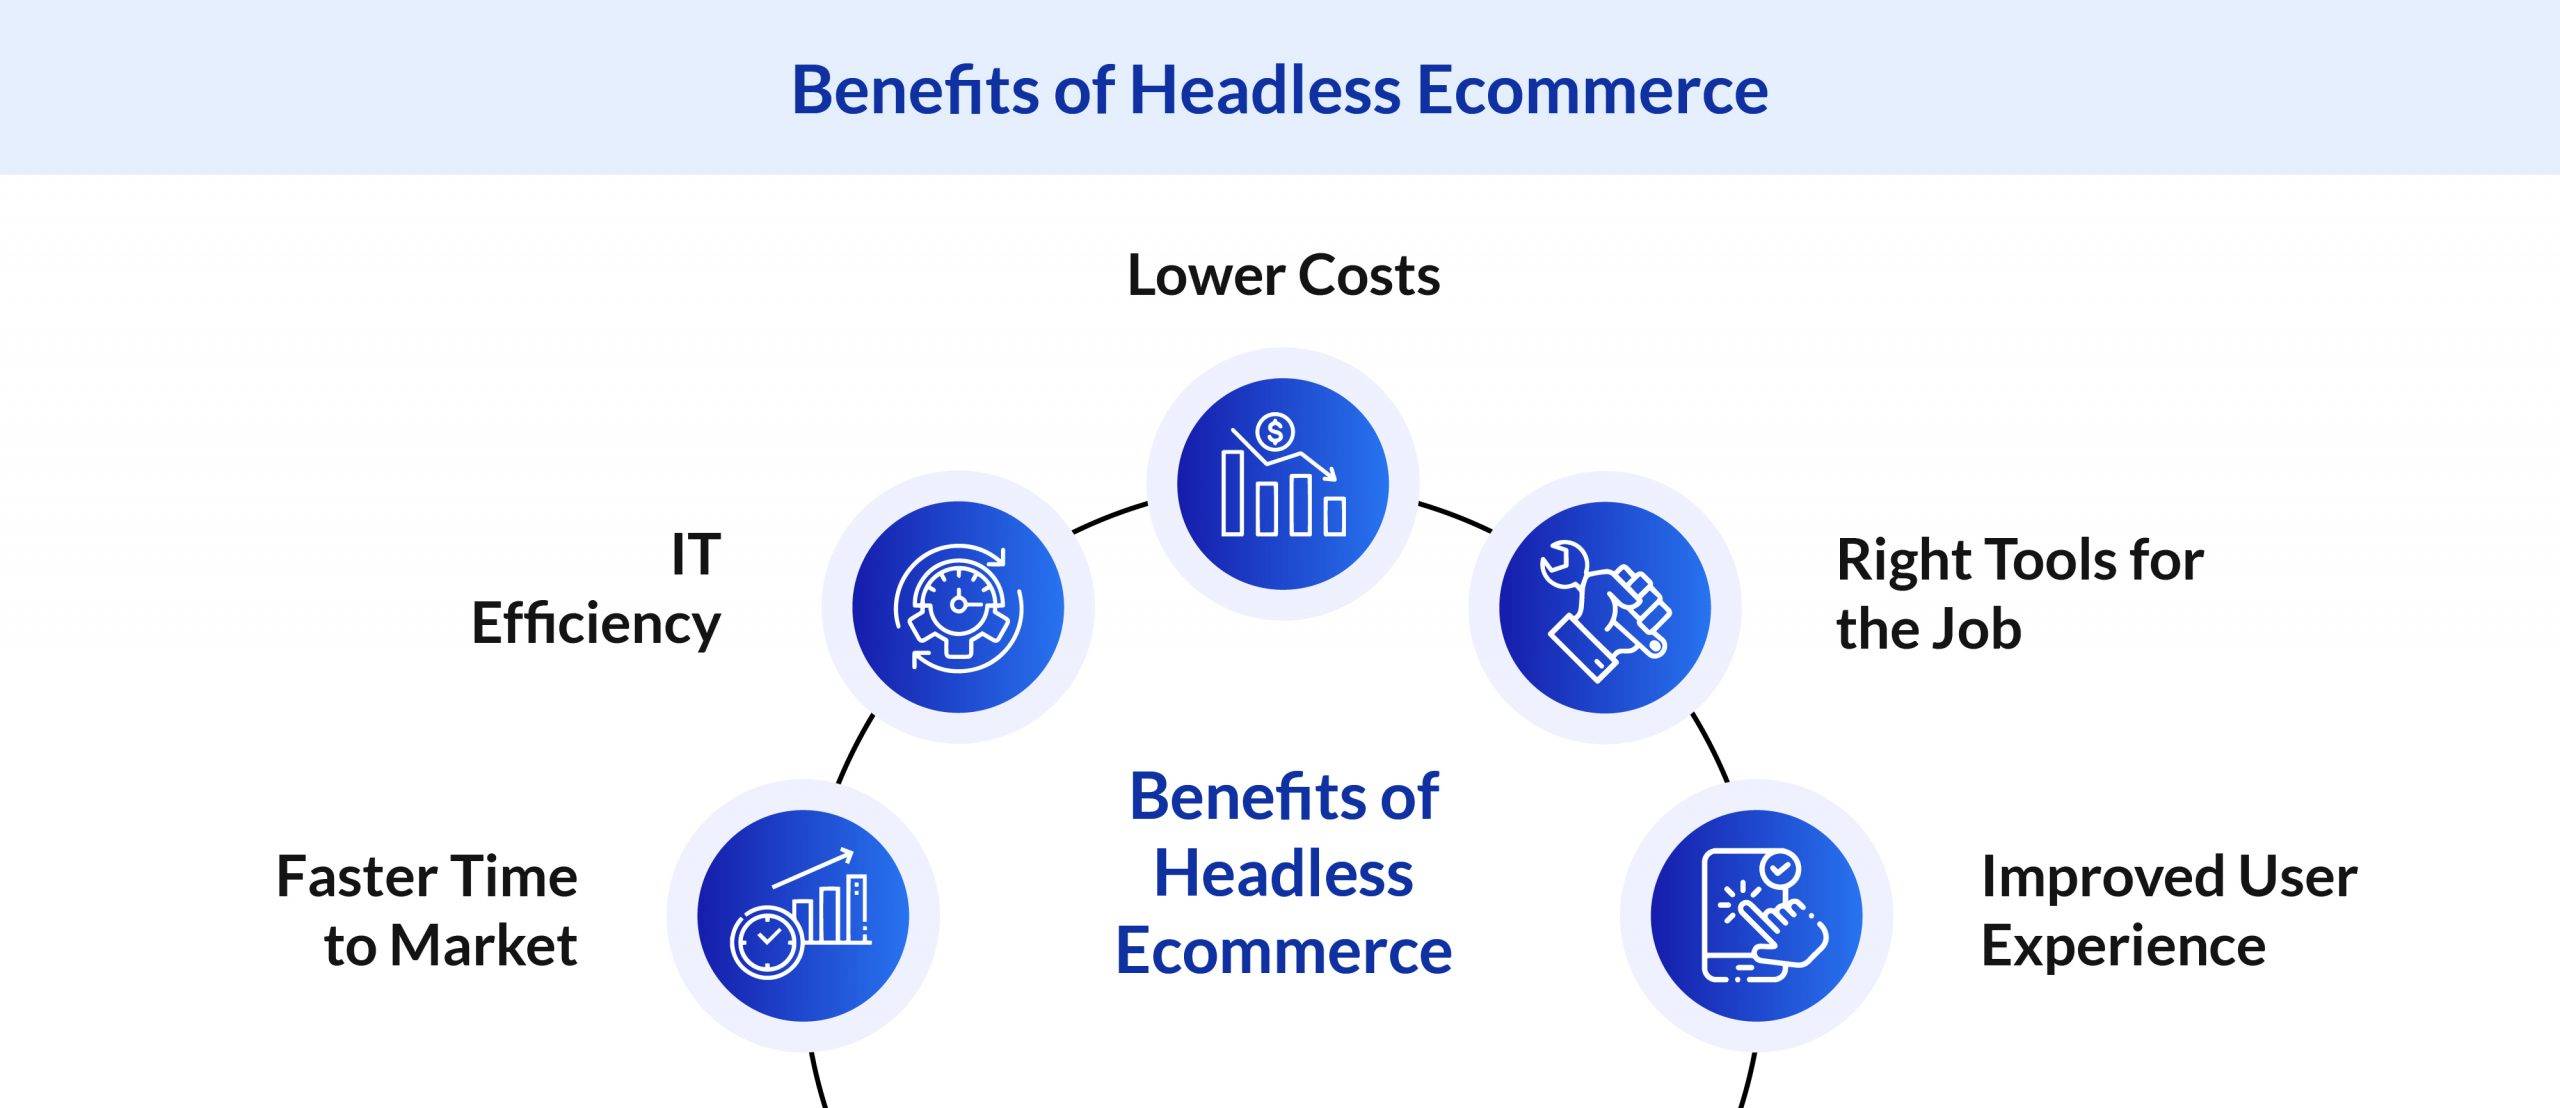 Benefits of headless e-commerce